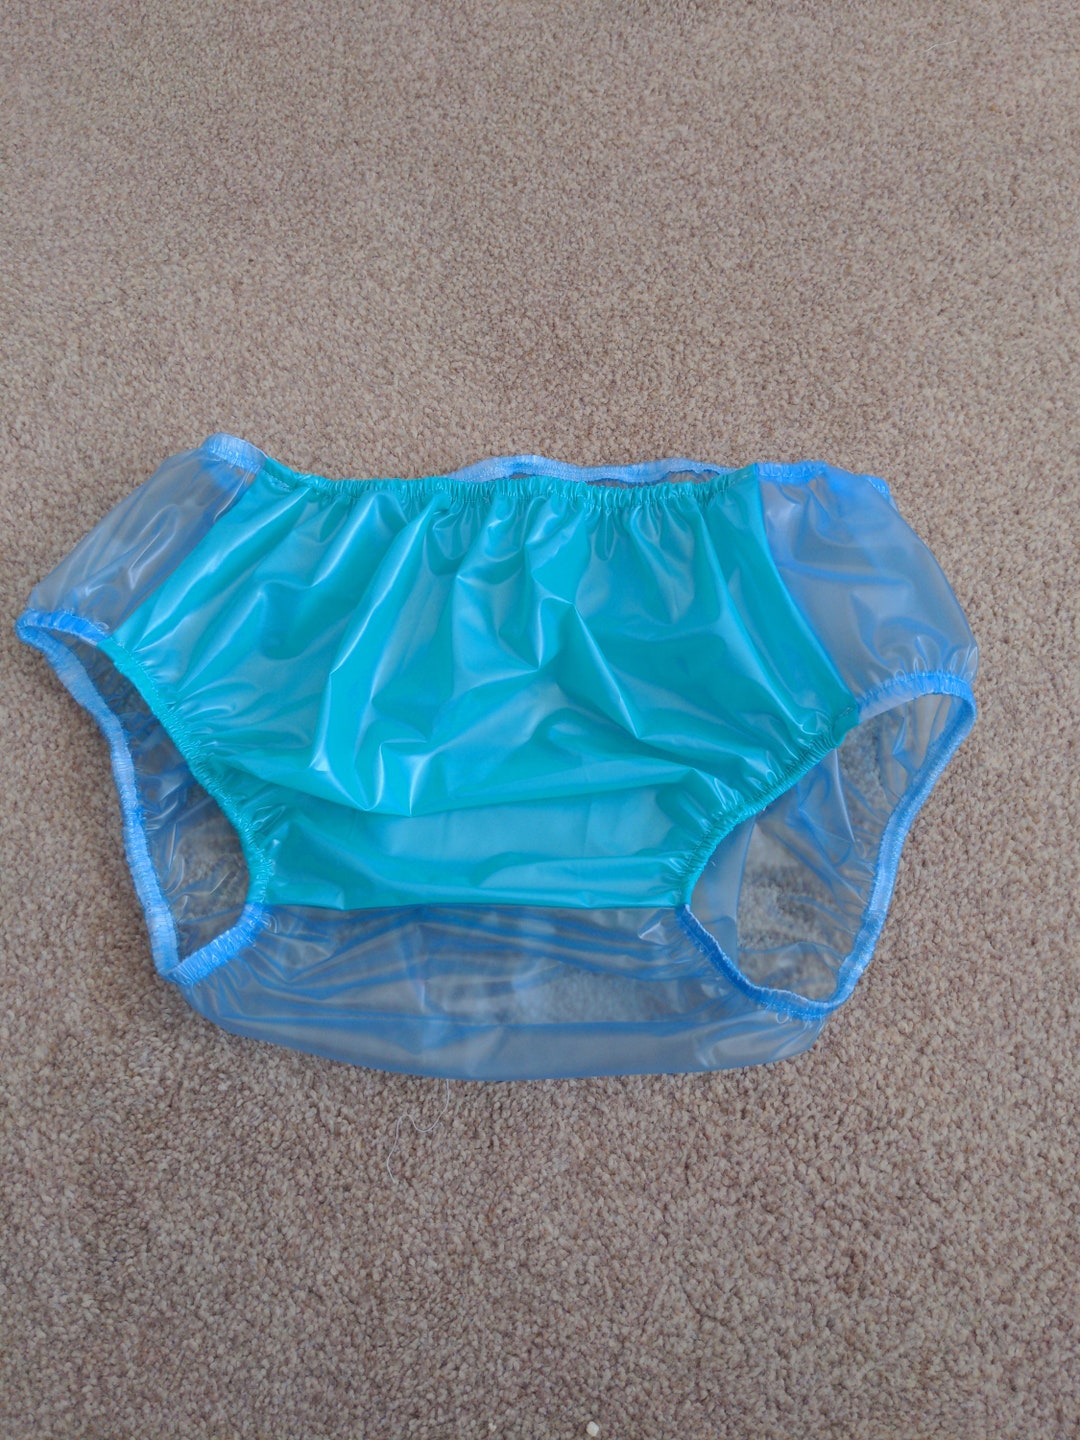 Waterproof Soft Mint/blue Plastic Pants 28-51 - Etsy